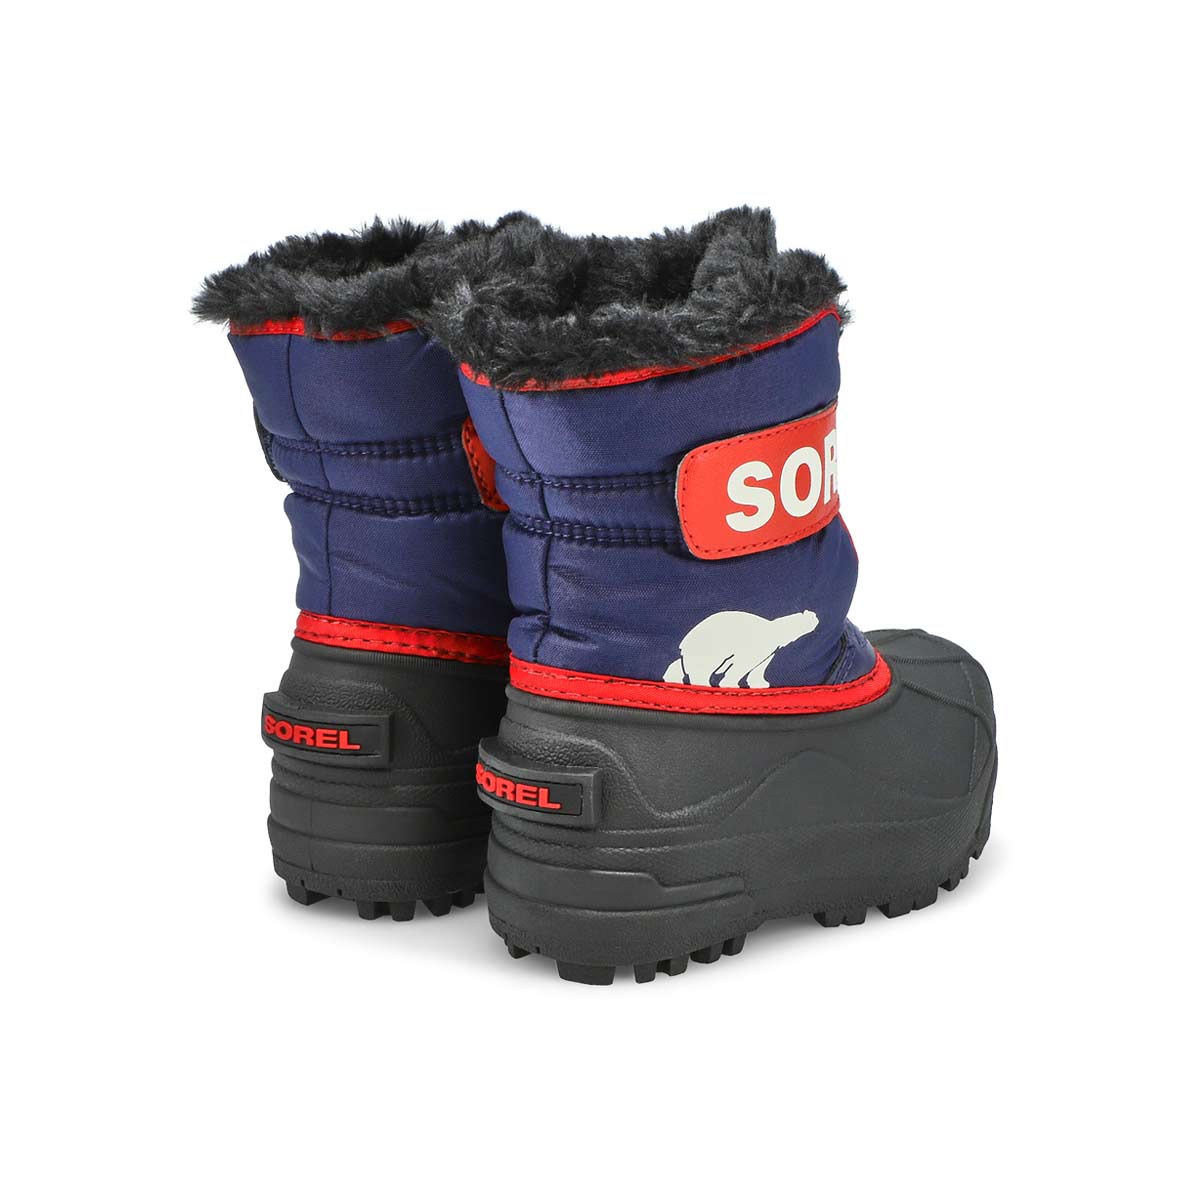 Saks Fifth Avenue Shoes Boots Snow Boots Babys & Little Kids Snow Commander Faux Fur-Lined Waterproof Boots 